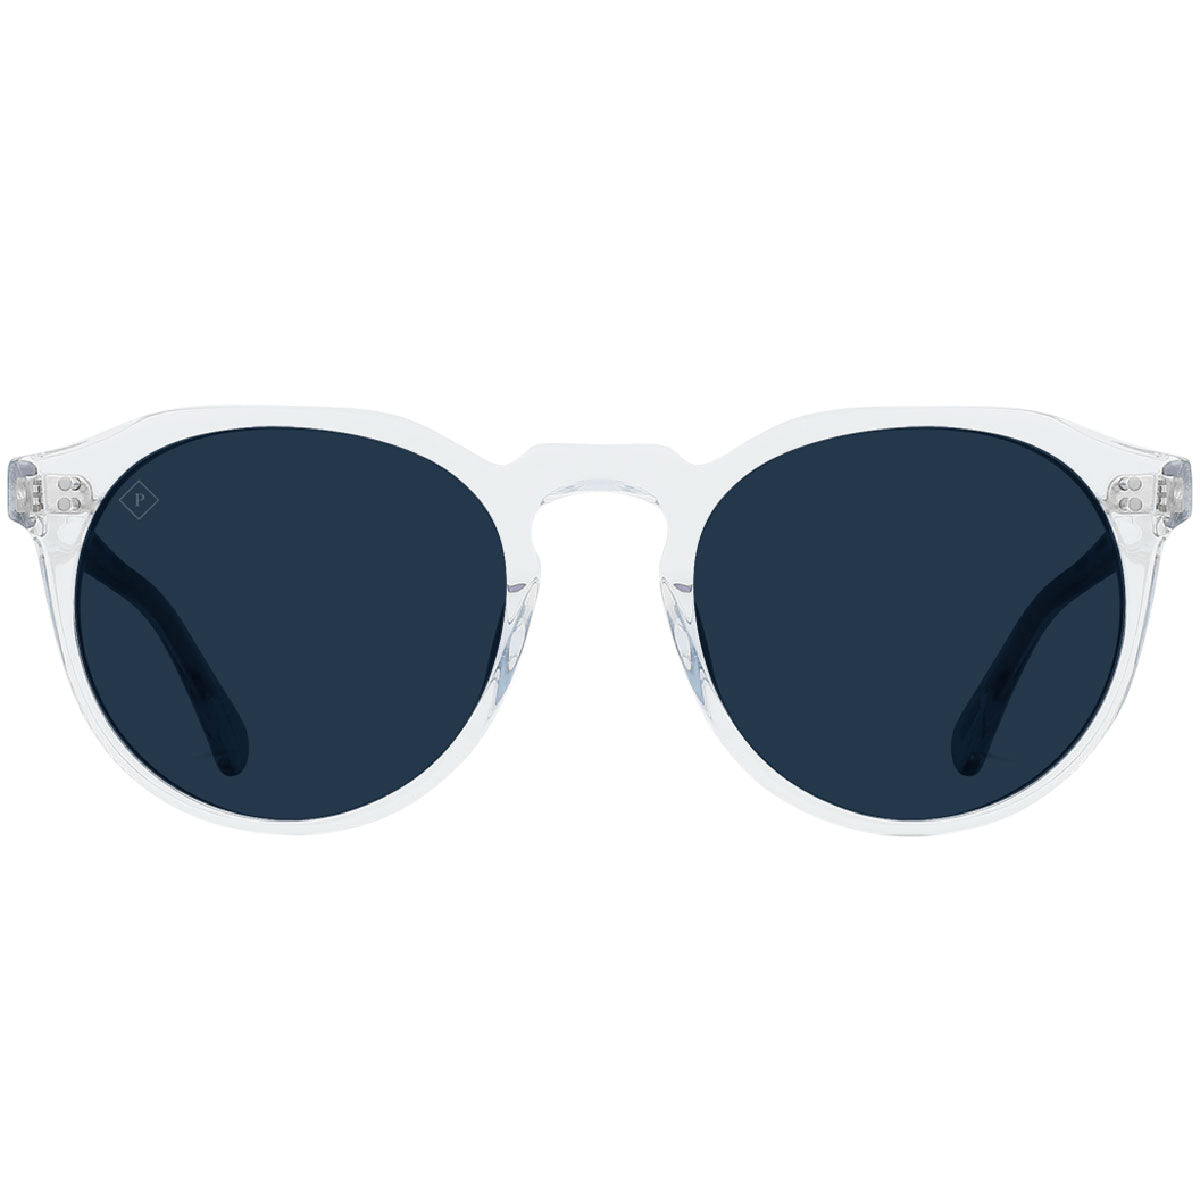 Raen Remmy 52 Sunglasses - Crystal Clear/Polarized Blue image 2